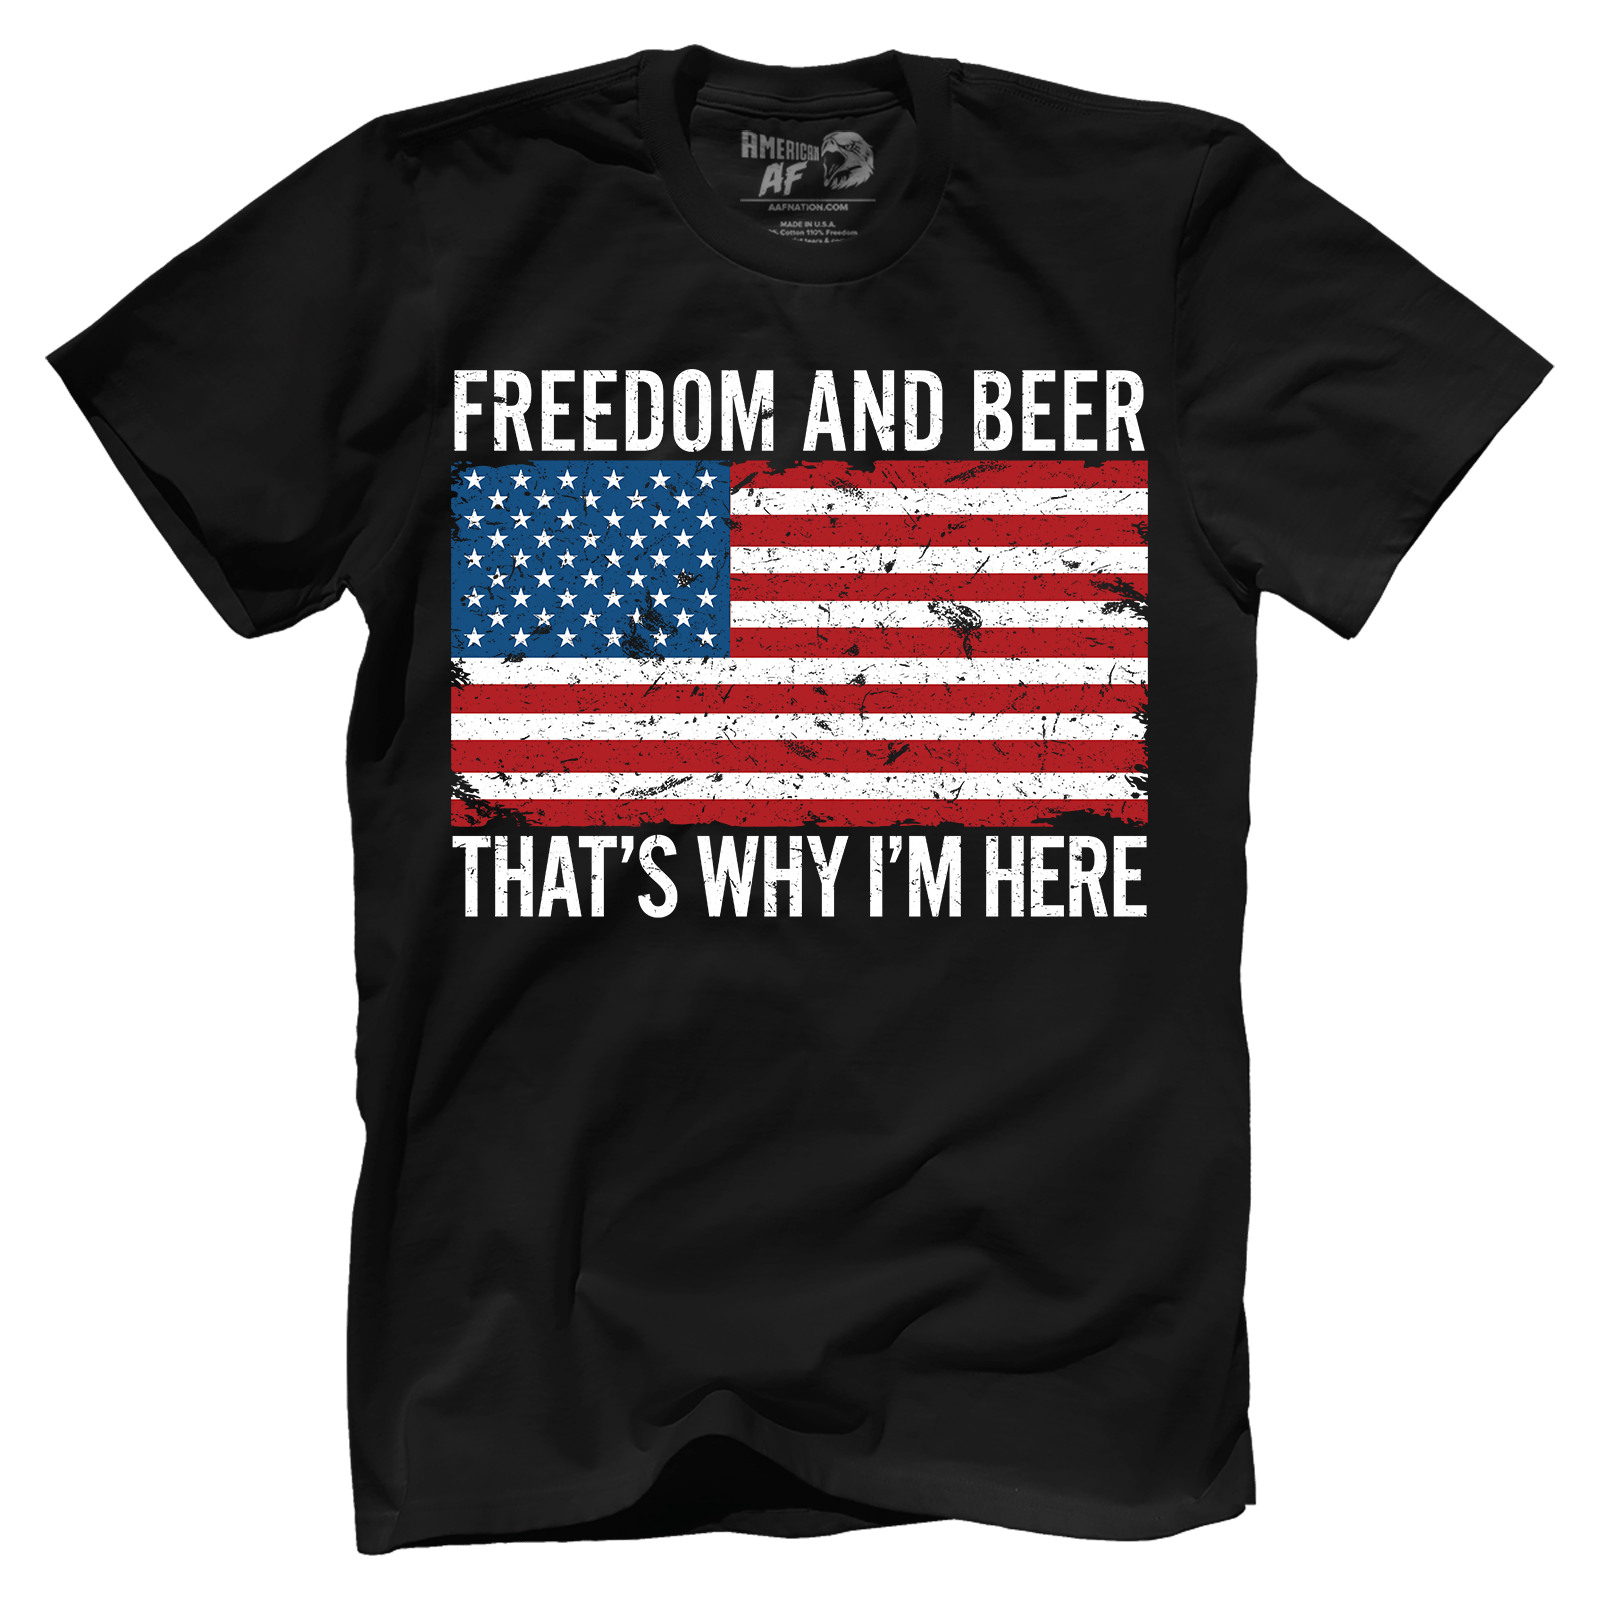 Freedom and Beer | American AF - AAF Nation